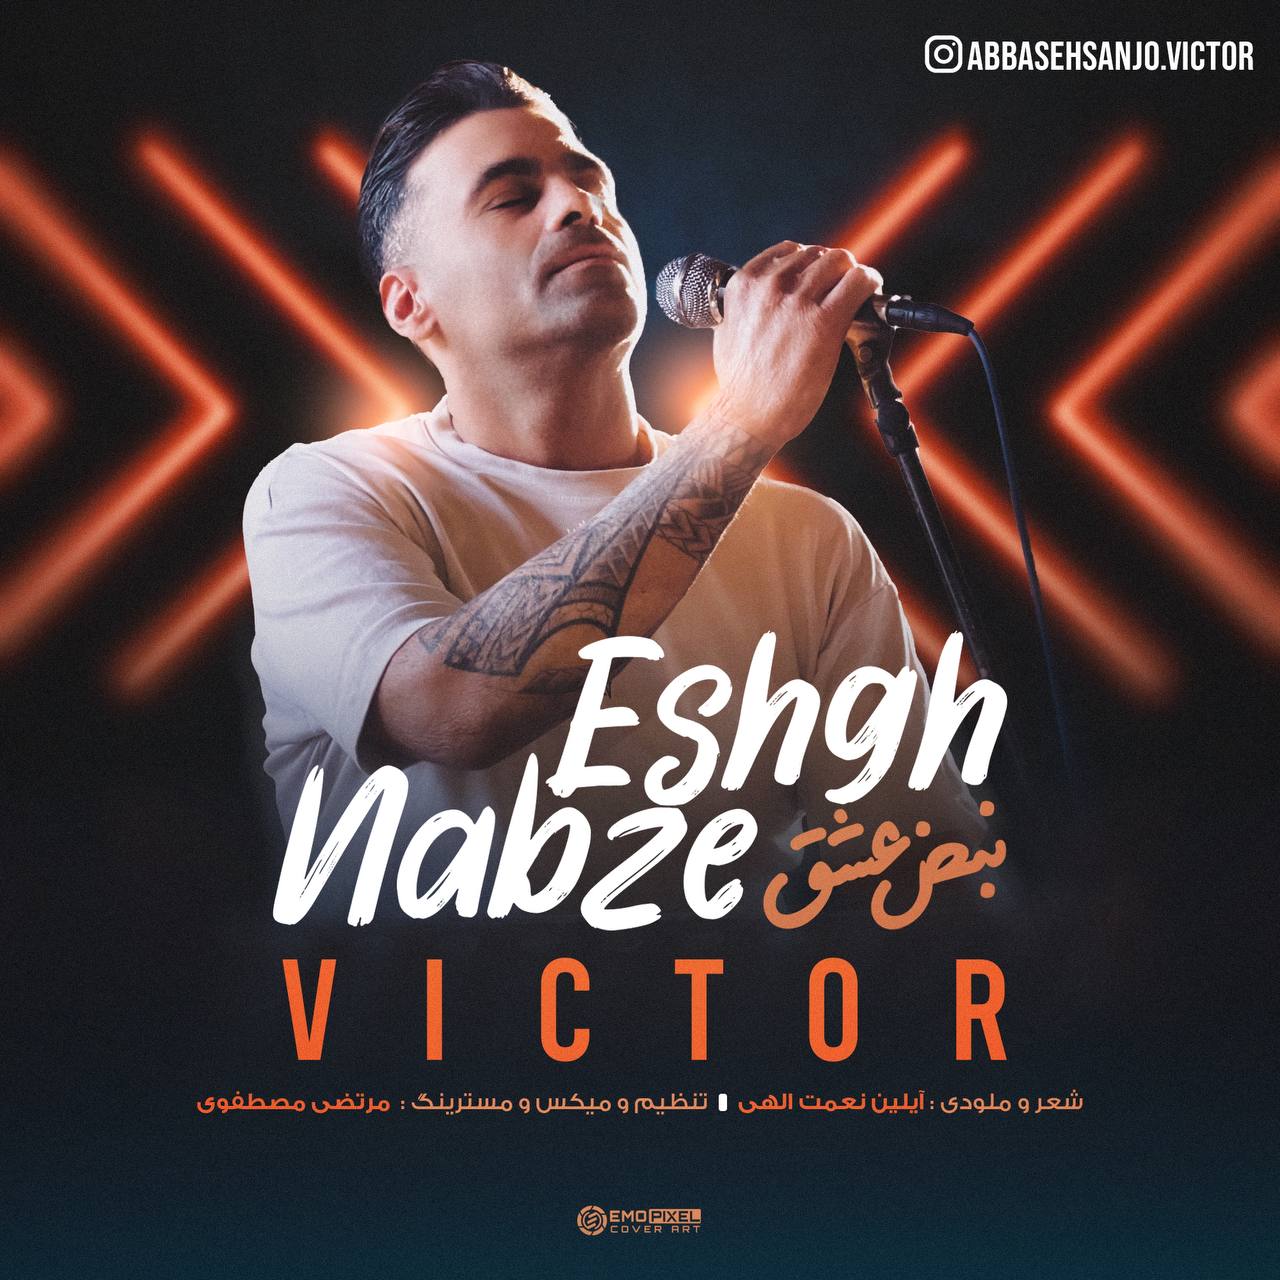 Victor – Nabze Eshgh